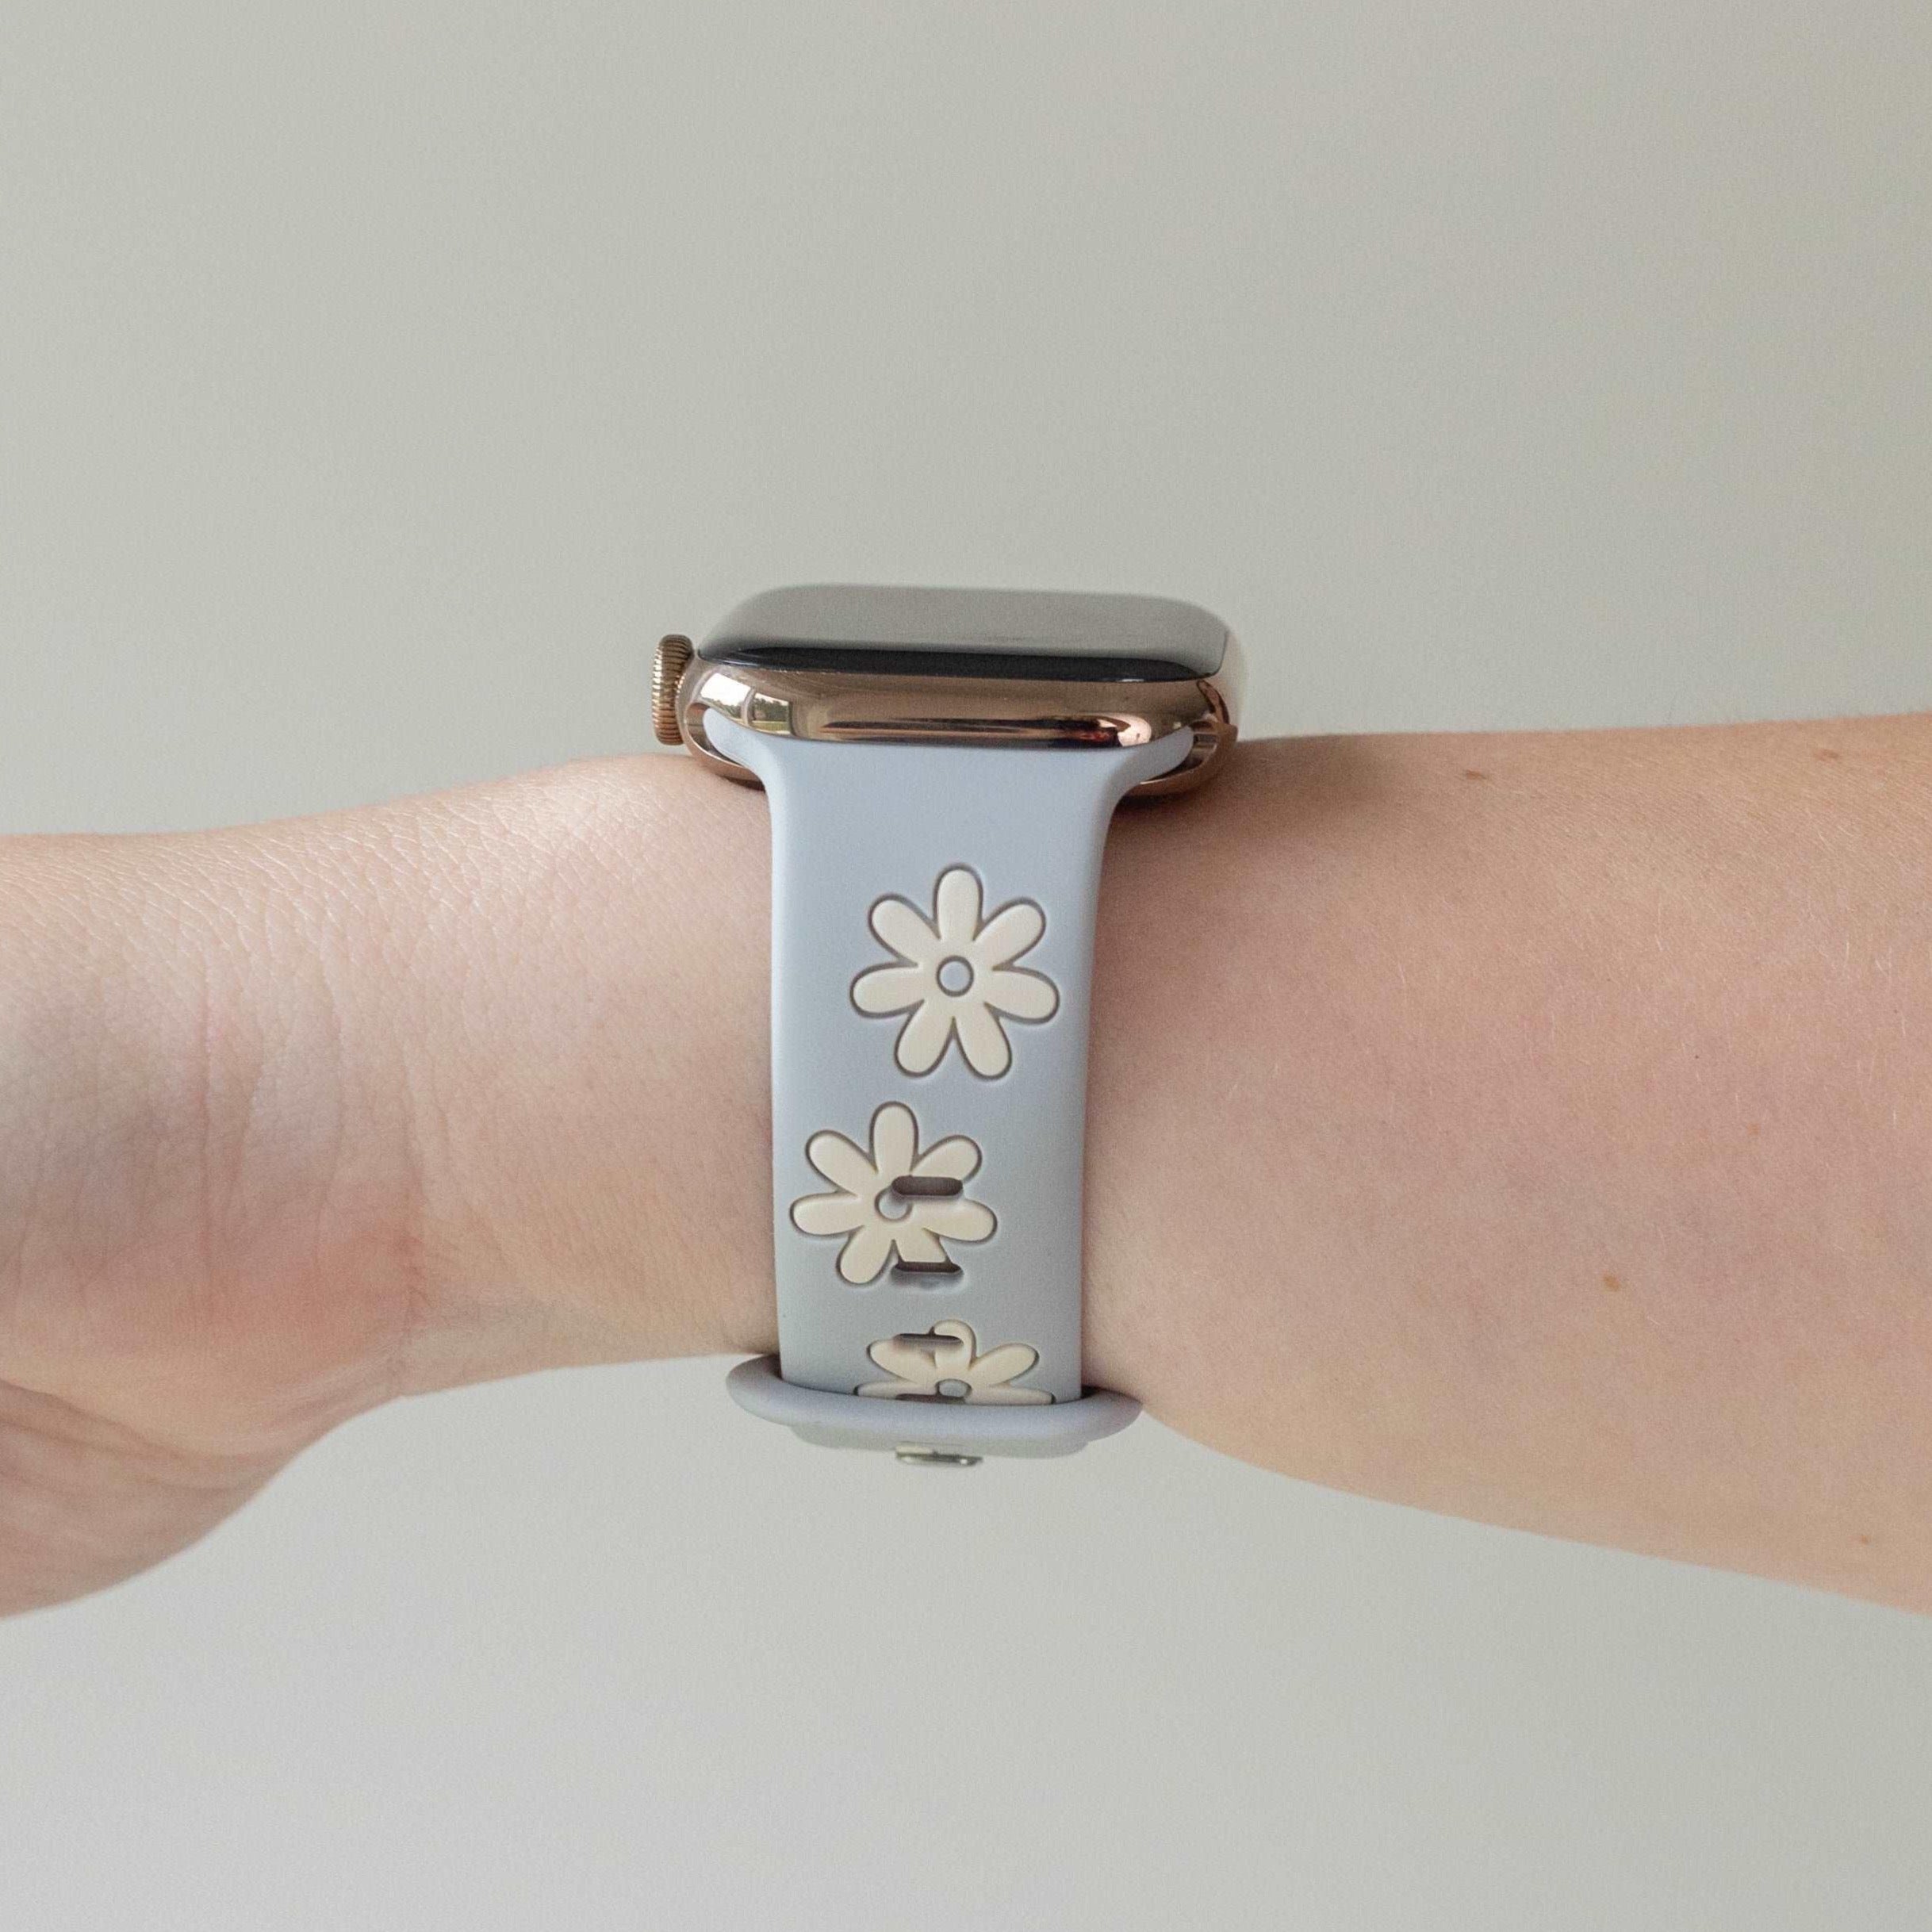 Spinning Daisy Flower Watches Women Blingbling Crystals Wrist watch Big  Size Real Ceramic Bracelets Watch Quartz Zircons Clocks